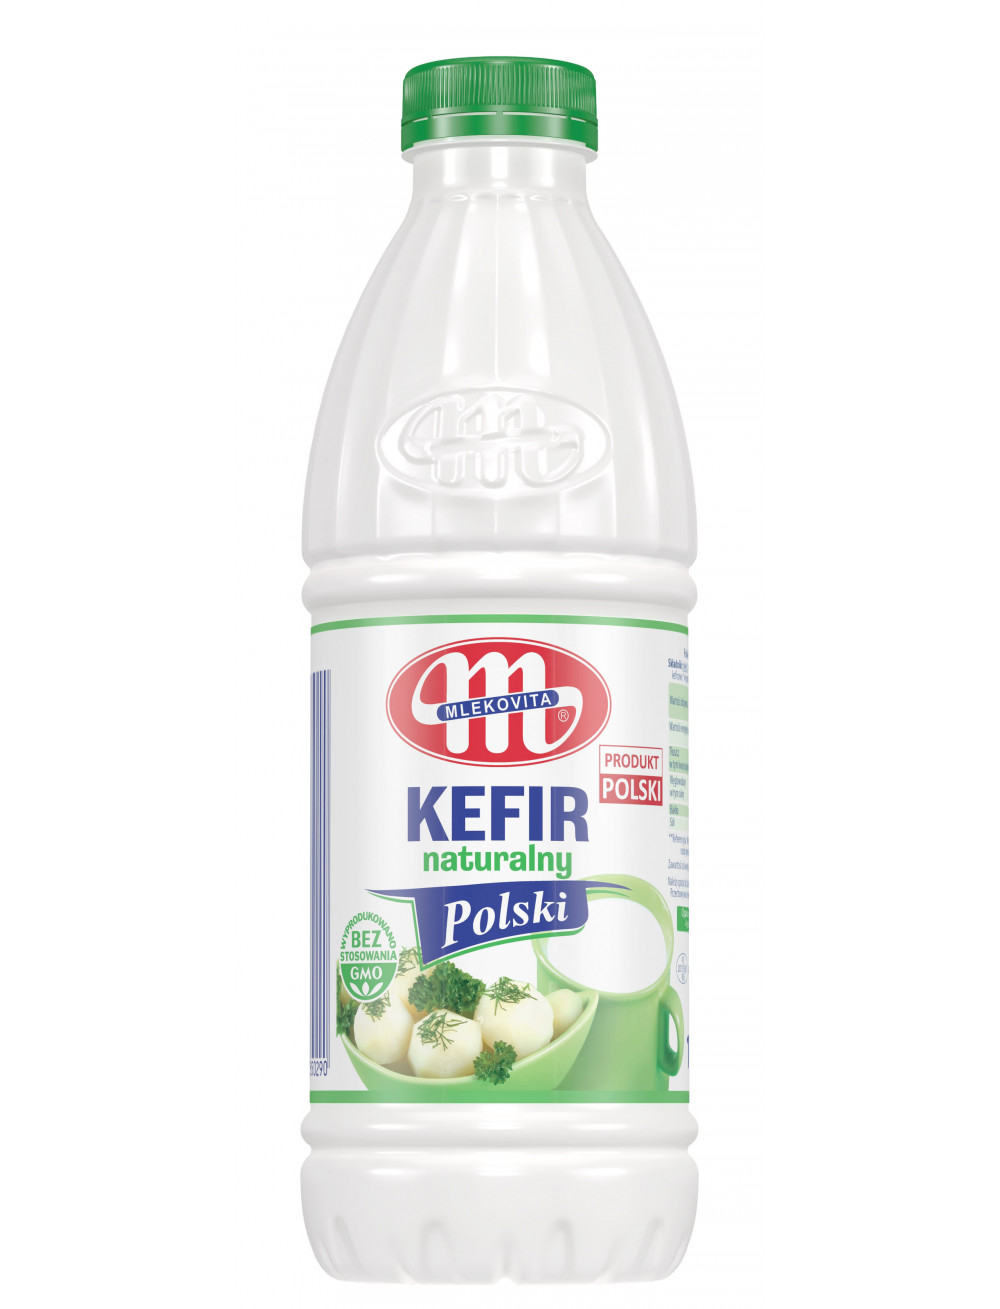 kefir-polski-naturalny-1-kg.jpg